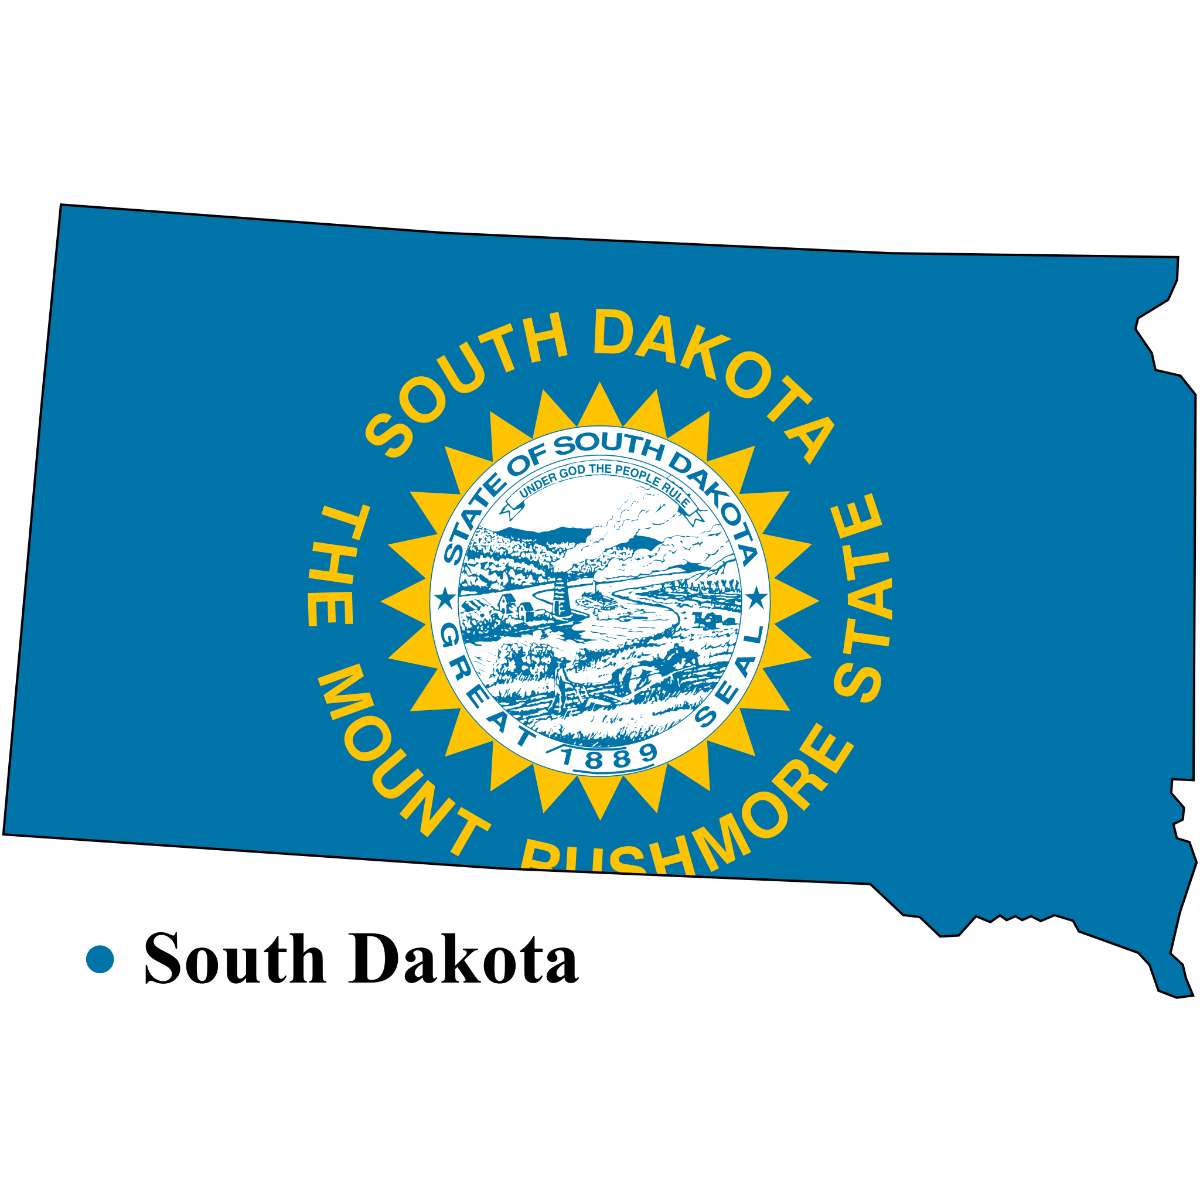 South Dakota State map cutout with South Dakota flag superimposed